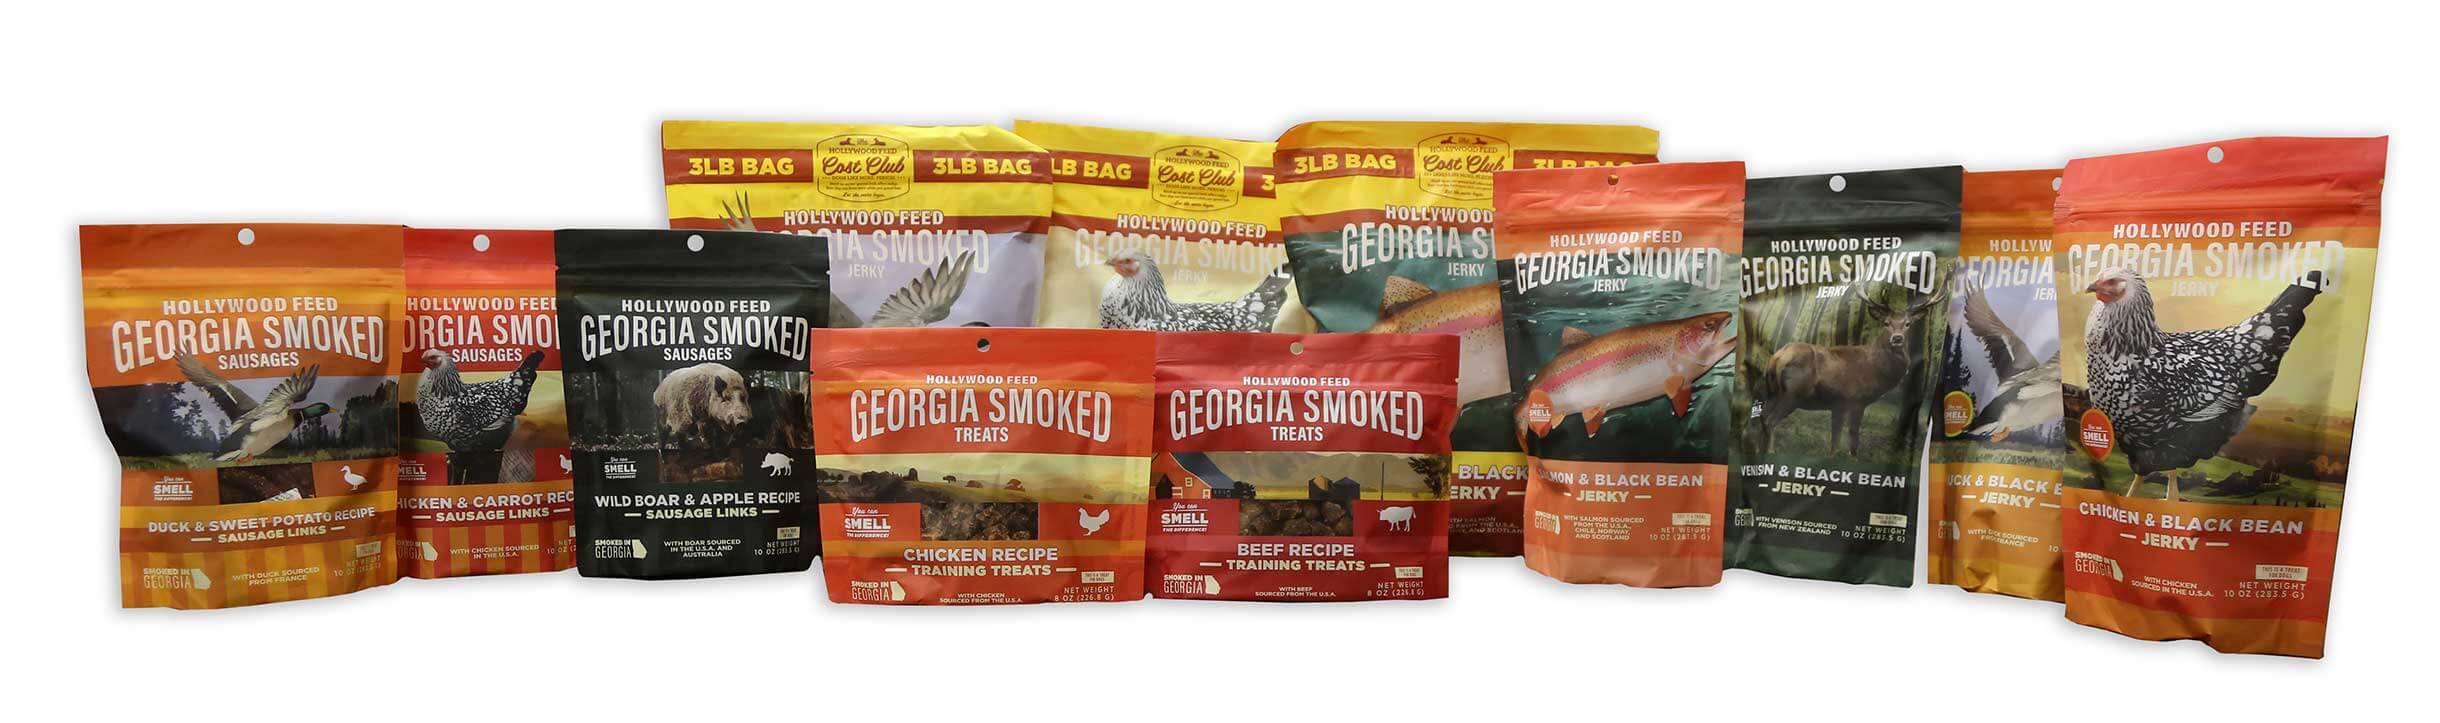 Georgia Smoked Jerky product line bags